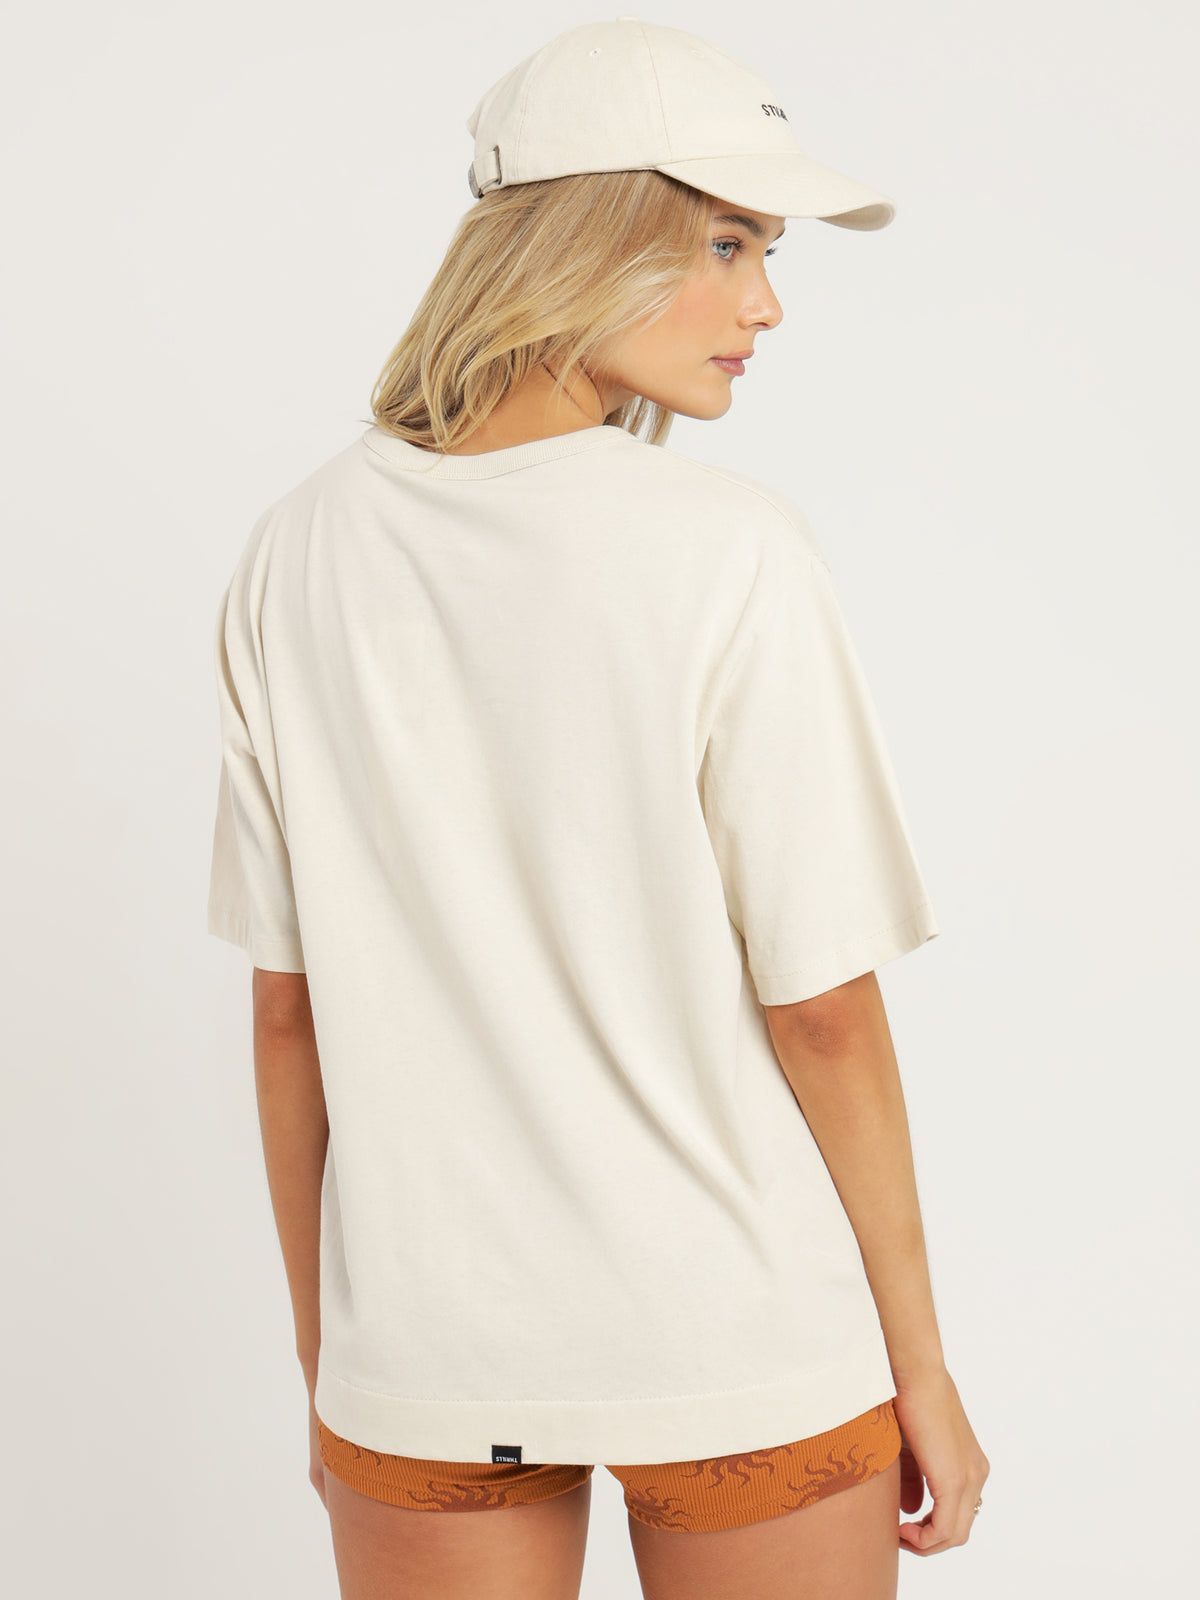 Spiritual Enlightenment T-Shirt in Heritage White